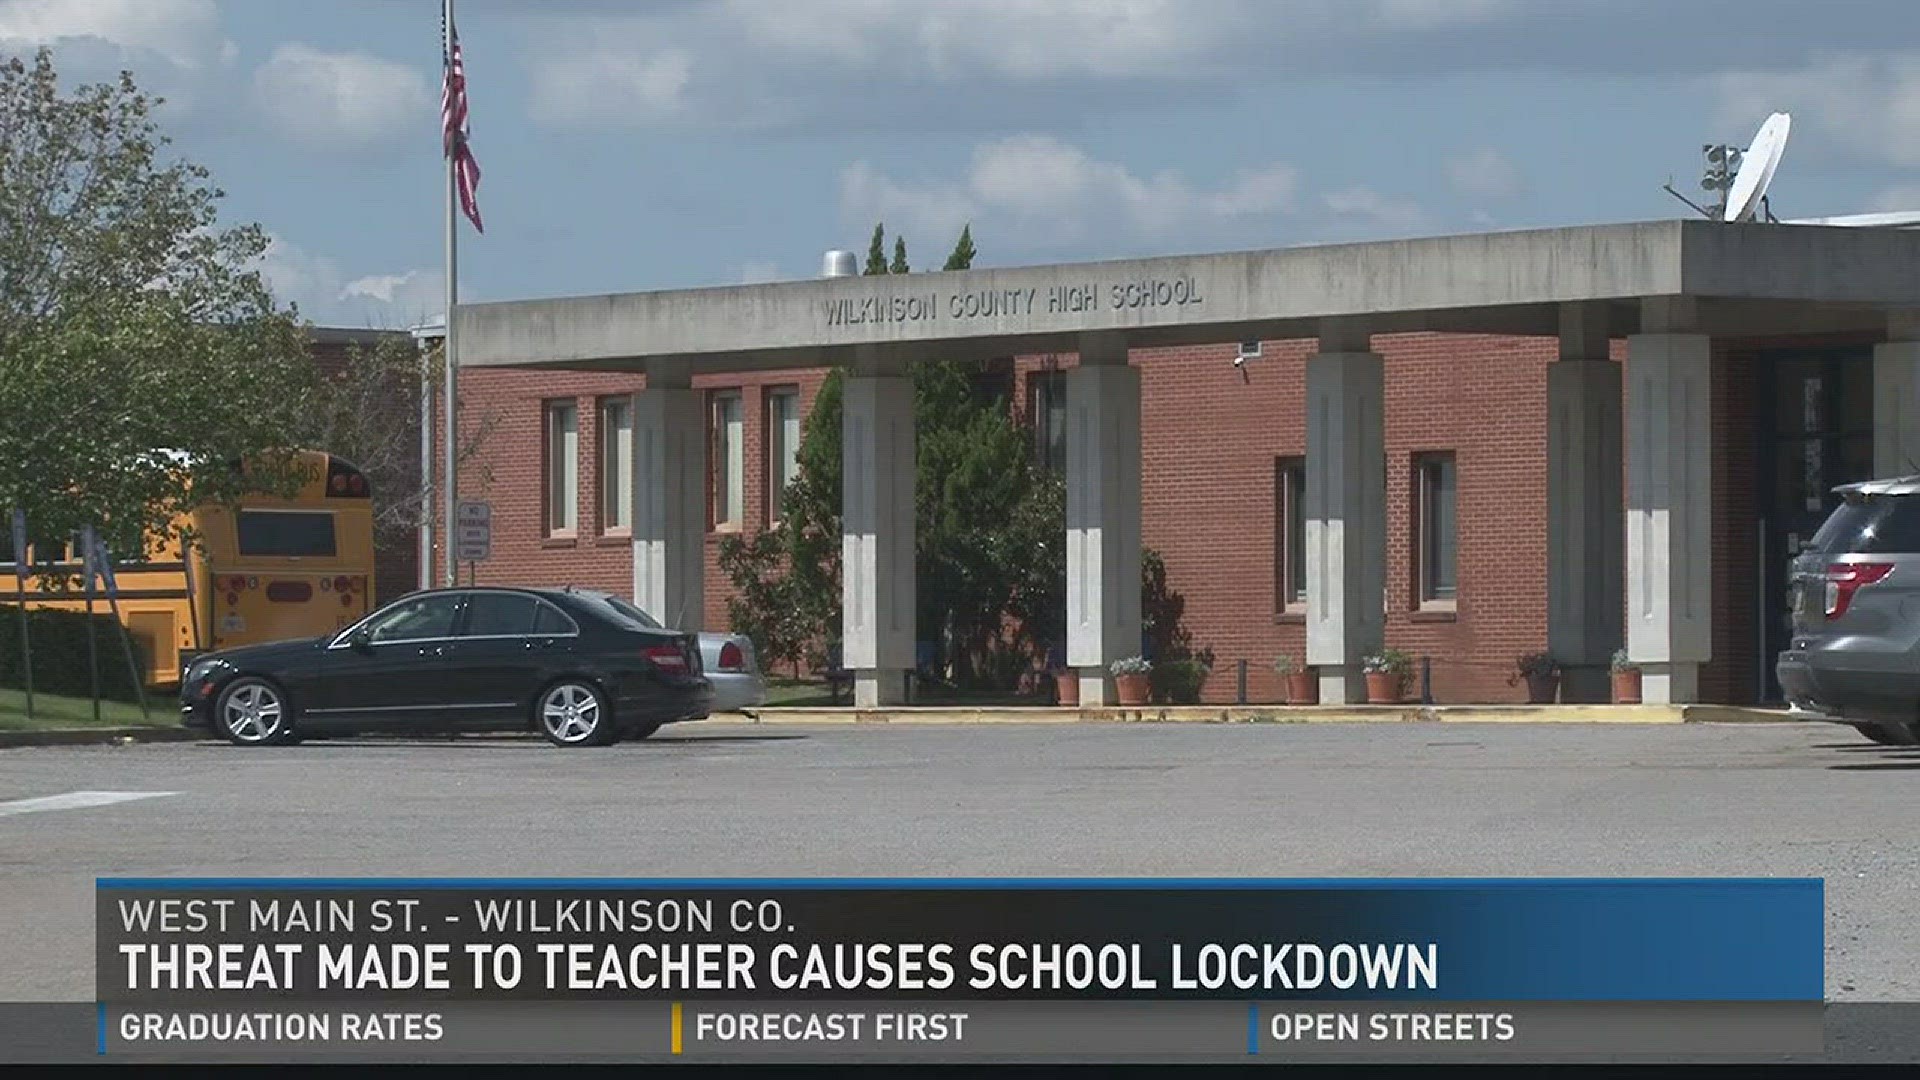 Threat made to teacher causes school lockdown